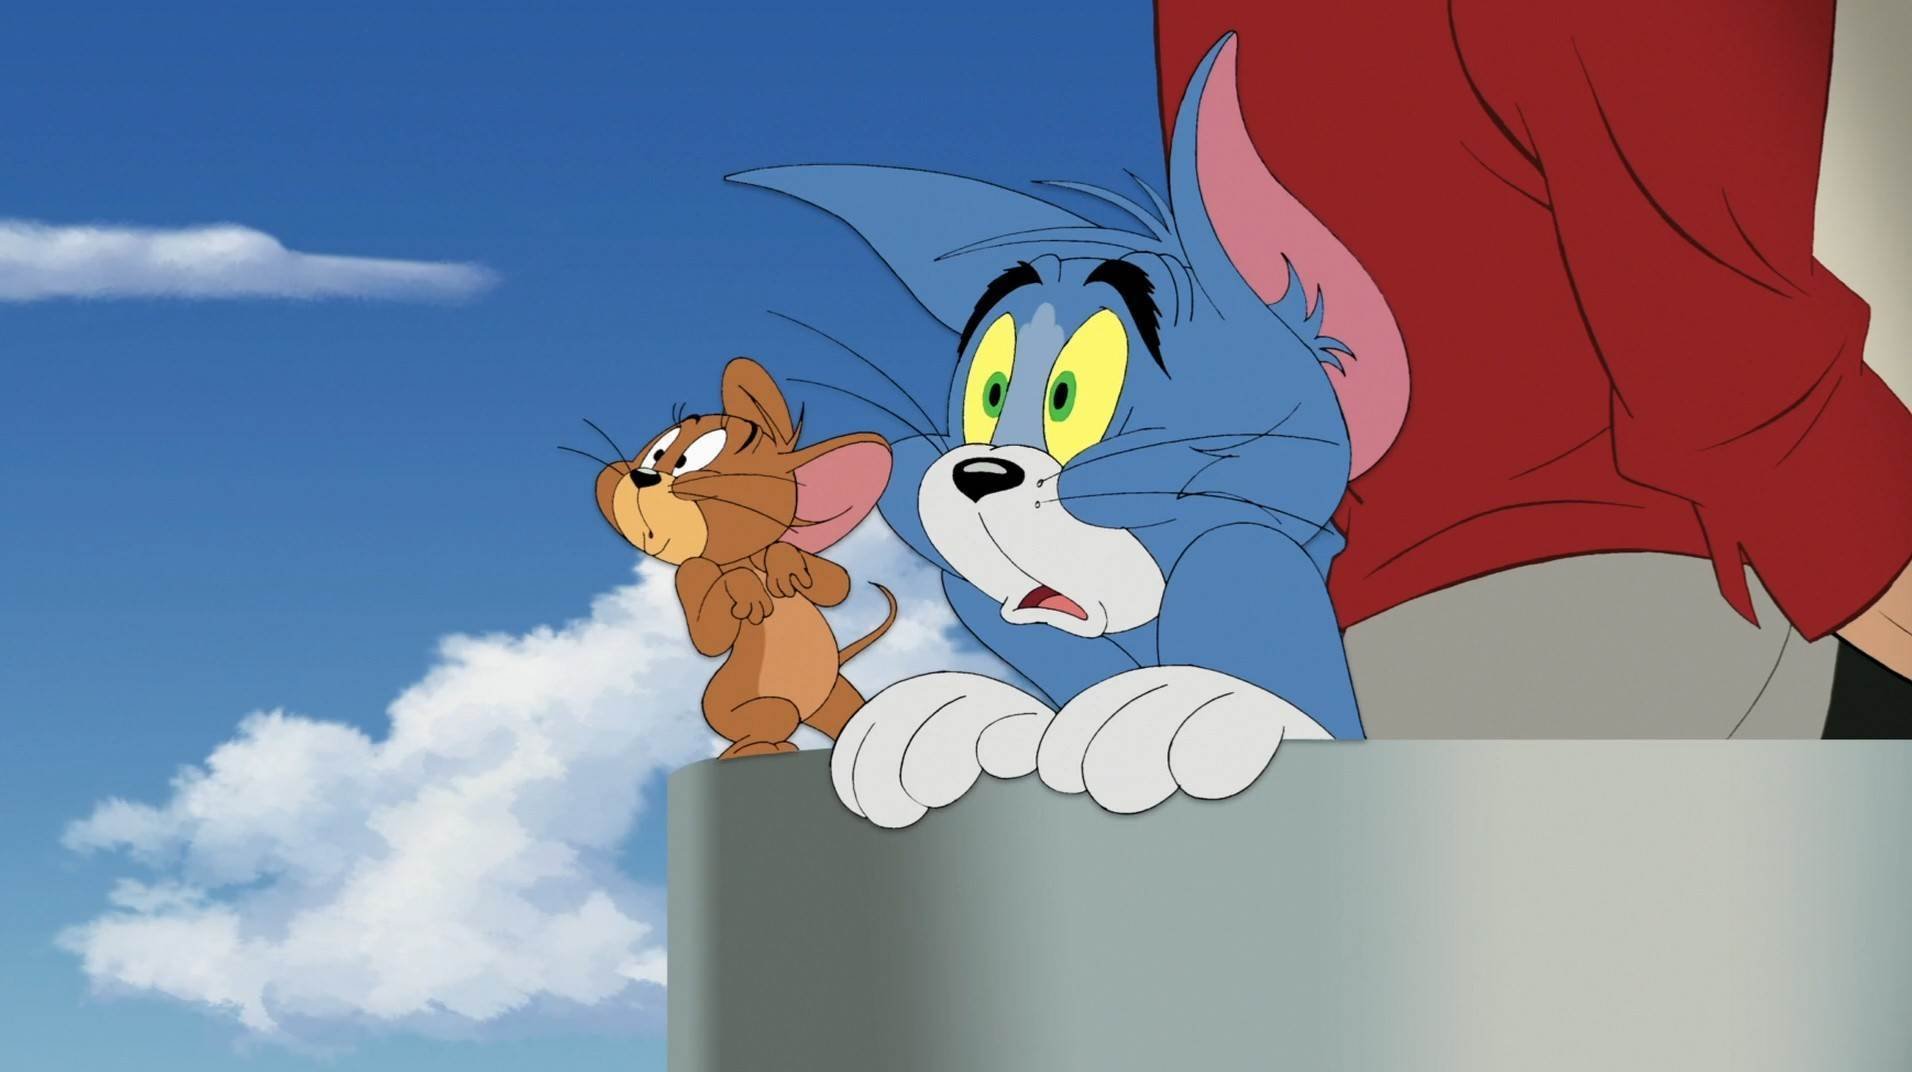 Tom jerry 2. Tom and Jerry. Tom and Jerry 2020. Том и Джерри 1963-1967 том.